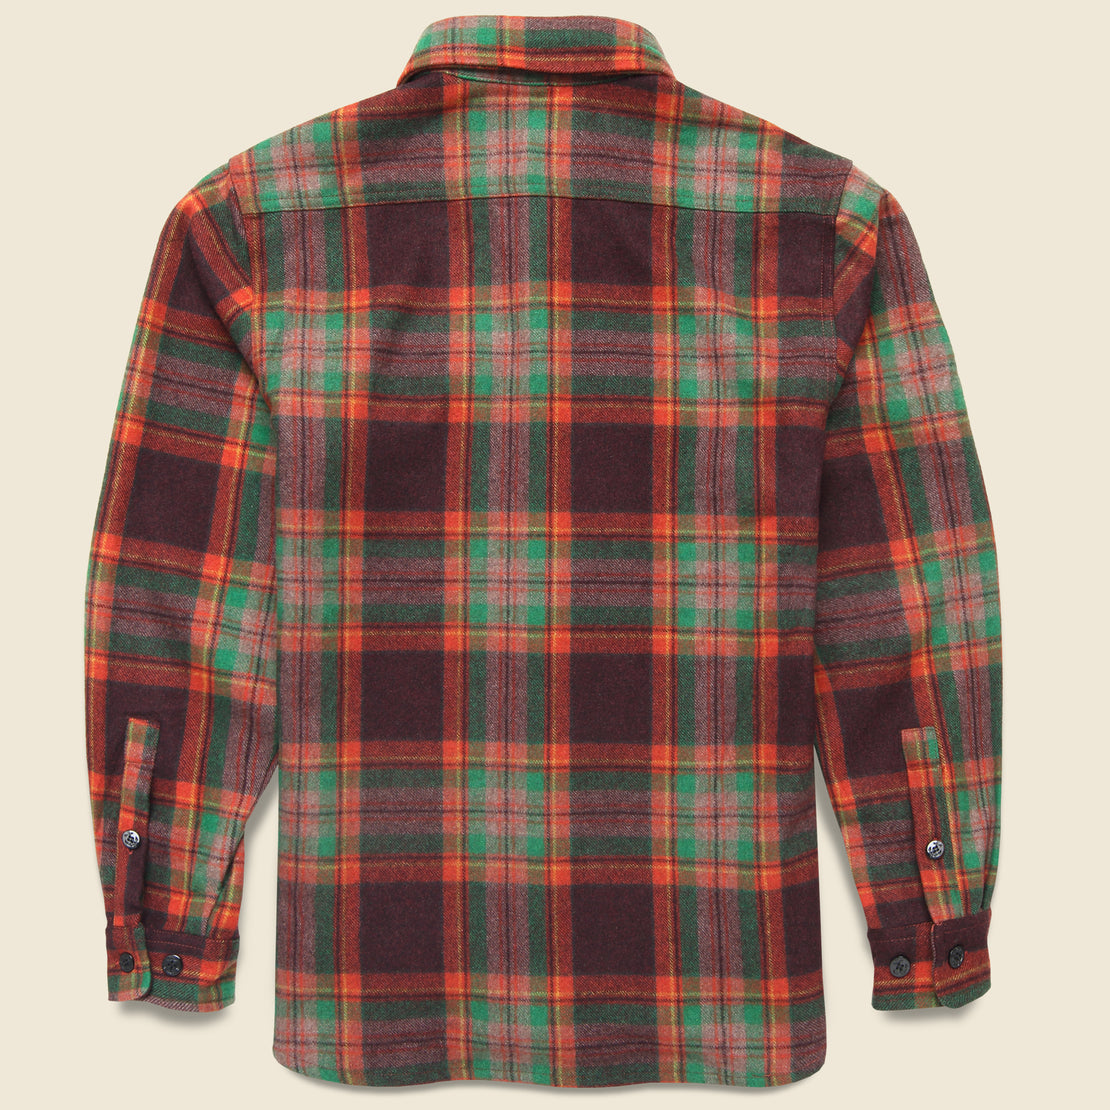 CPO Wool Shirt - Brick Plaid - Schott - STAG Provisions - Tops - L/S Woven - Overshirt